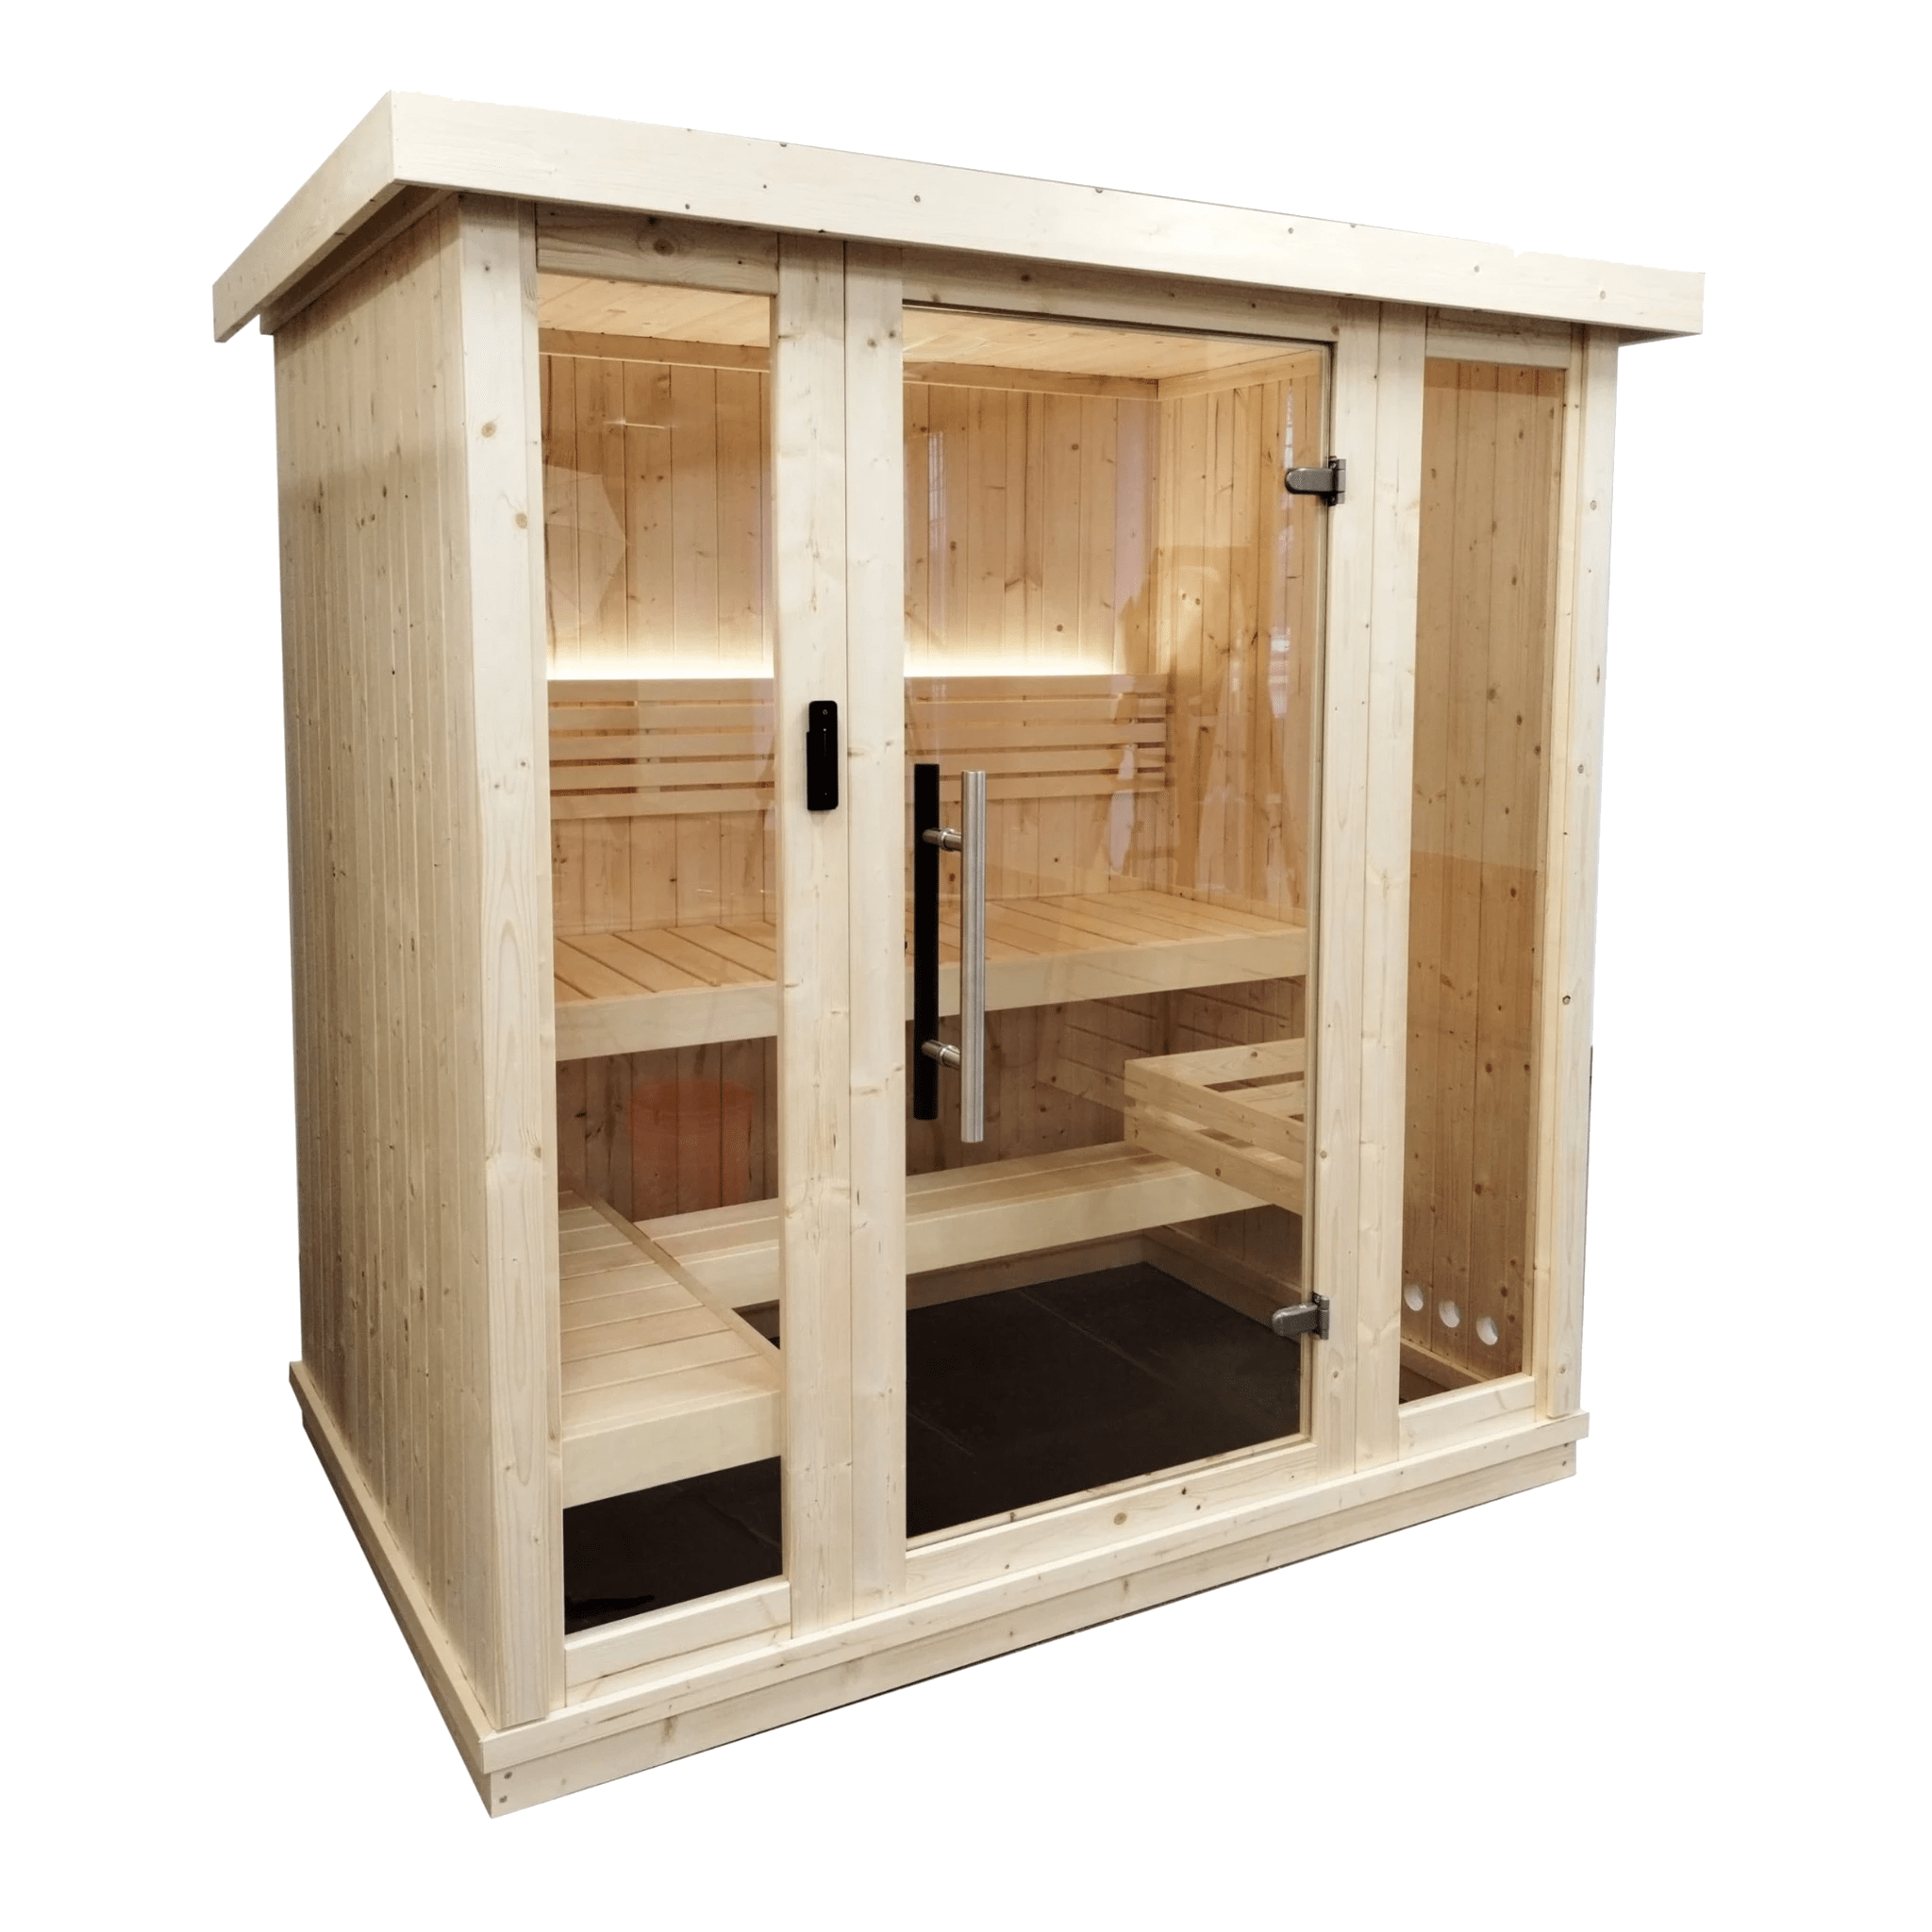 SaunaLife SL-MODELX6 810127970212 Traditional Sauna SaunaLife Model X6 3 Person Indoor Sauna